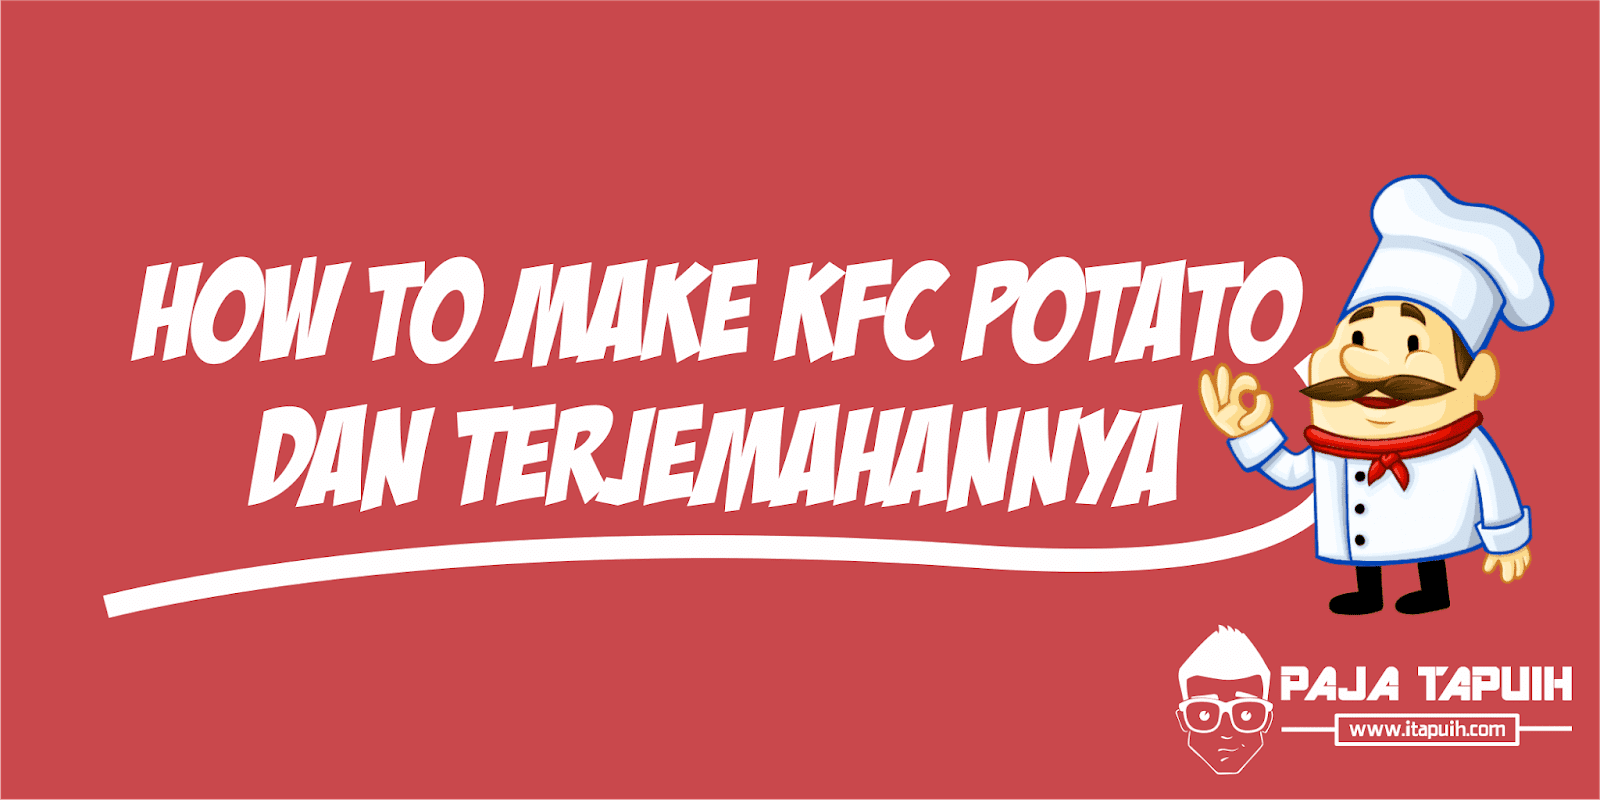 Procedure Text: How to Make KFC Potato dan Terjemahannya